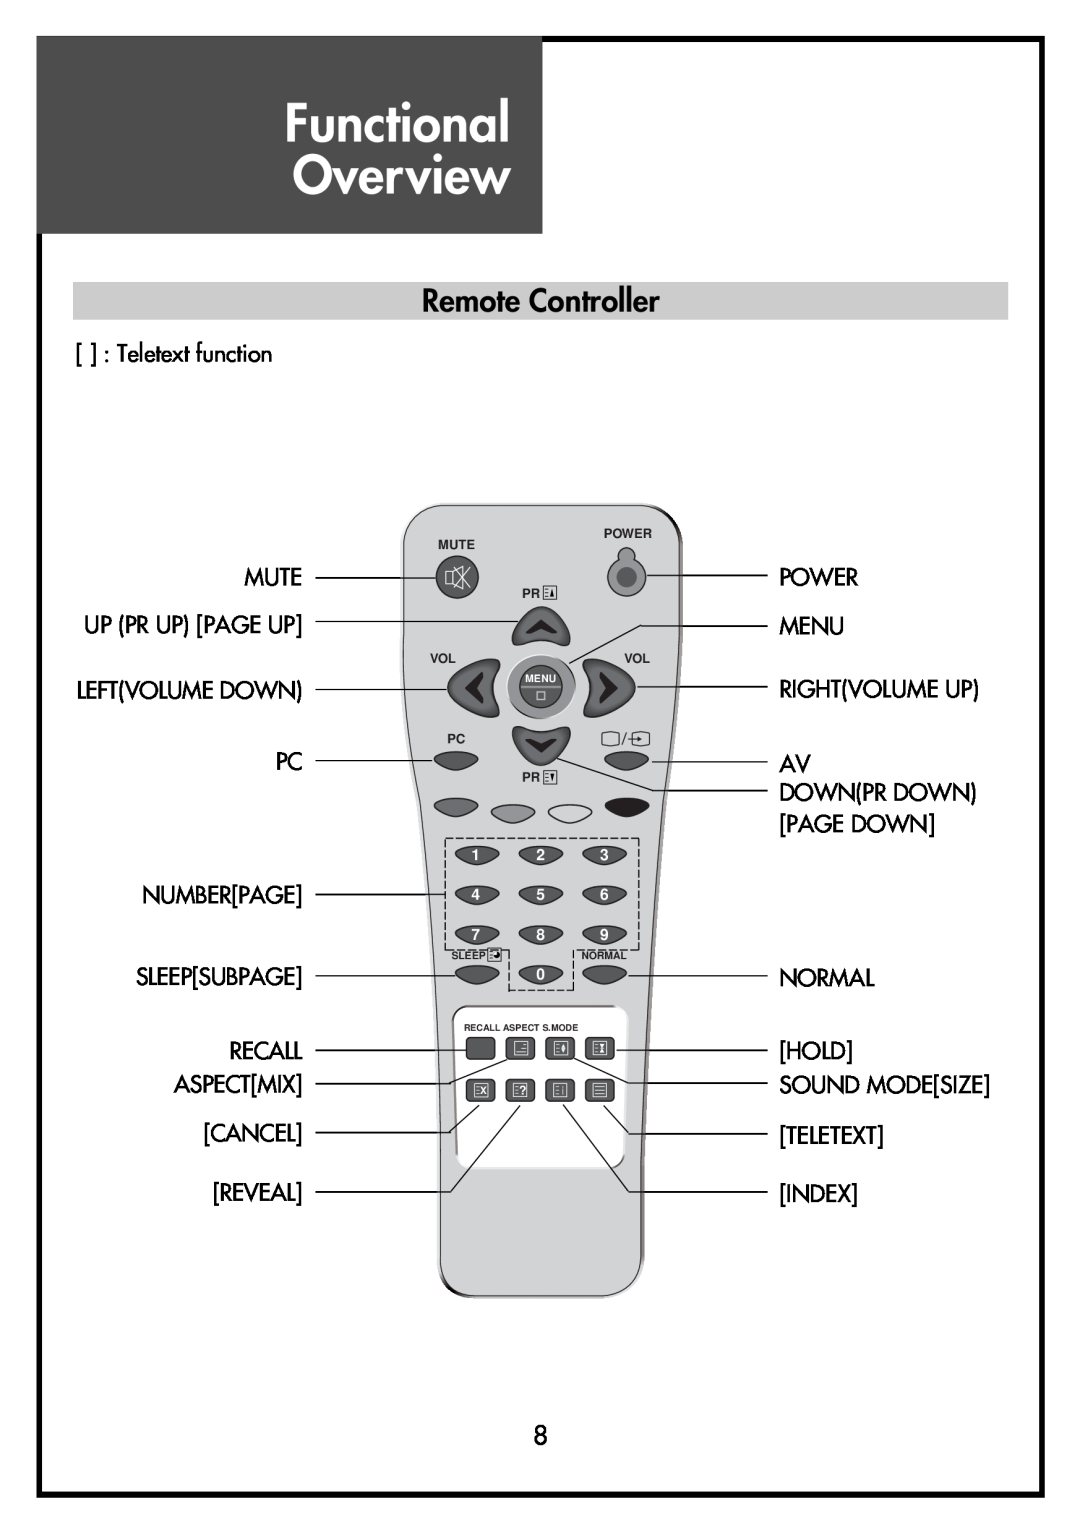 Daewoo DSL-17D4 Remote Controller, Functional Overview, 1 2 4 5 7, Power Mute Pr Volvol, Pc Pr, Menu, Sleep, Normal 